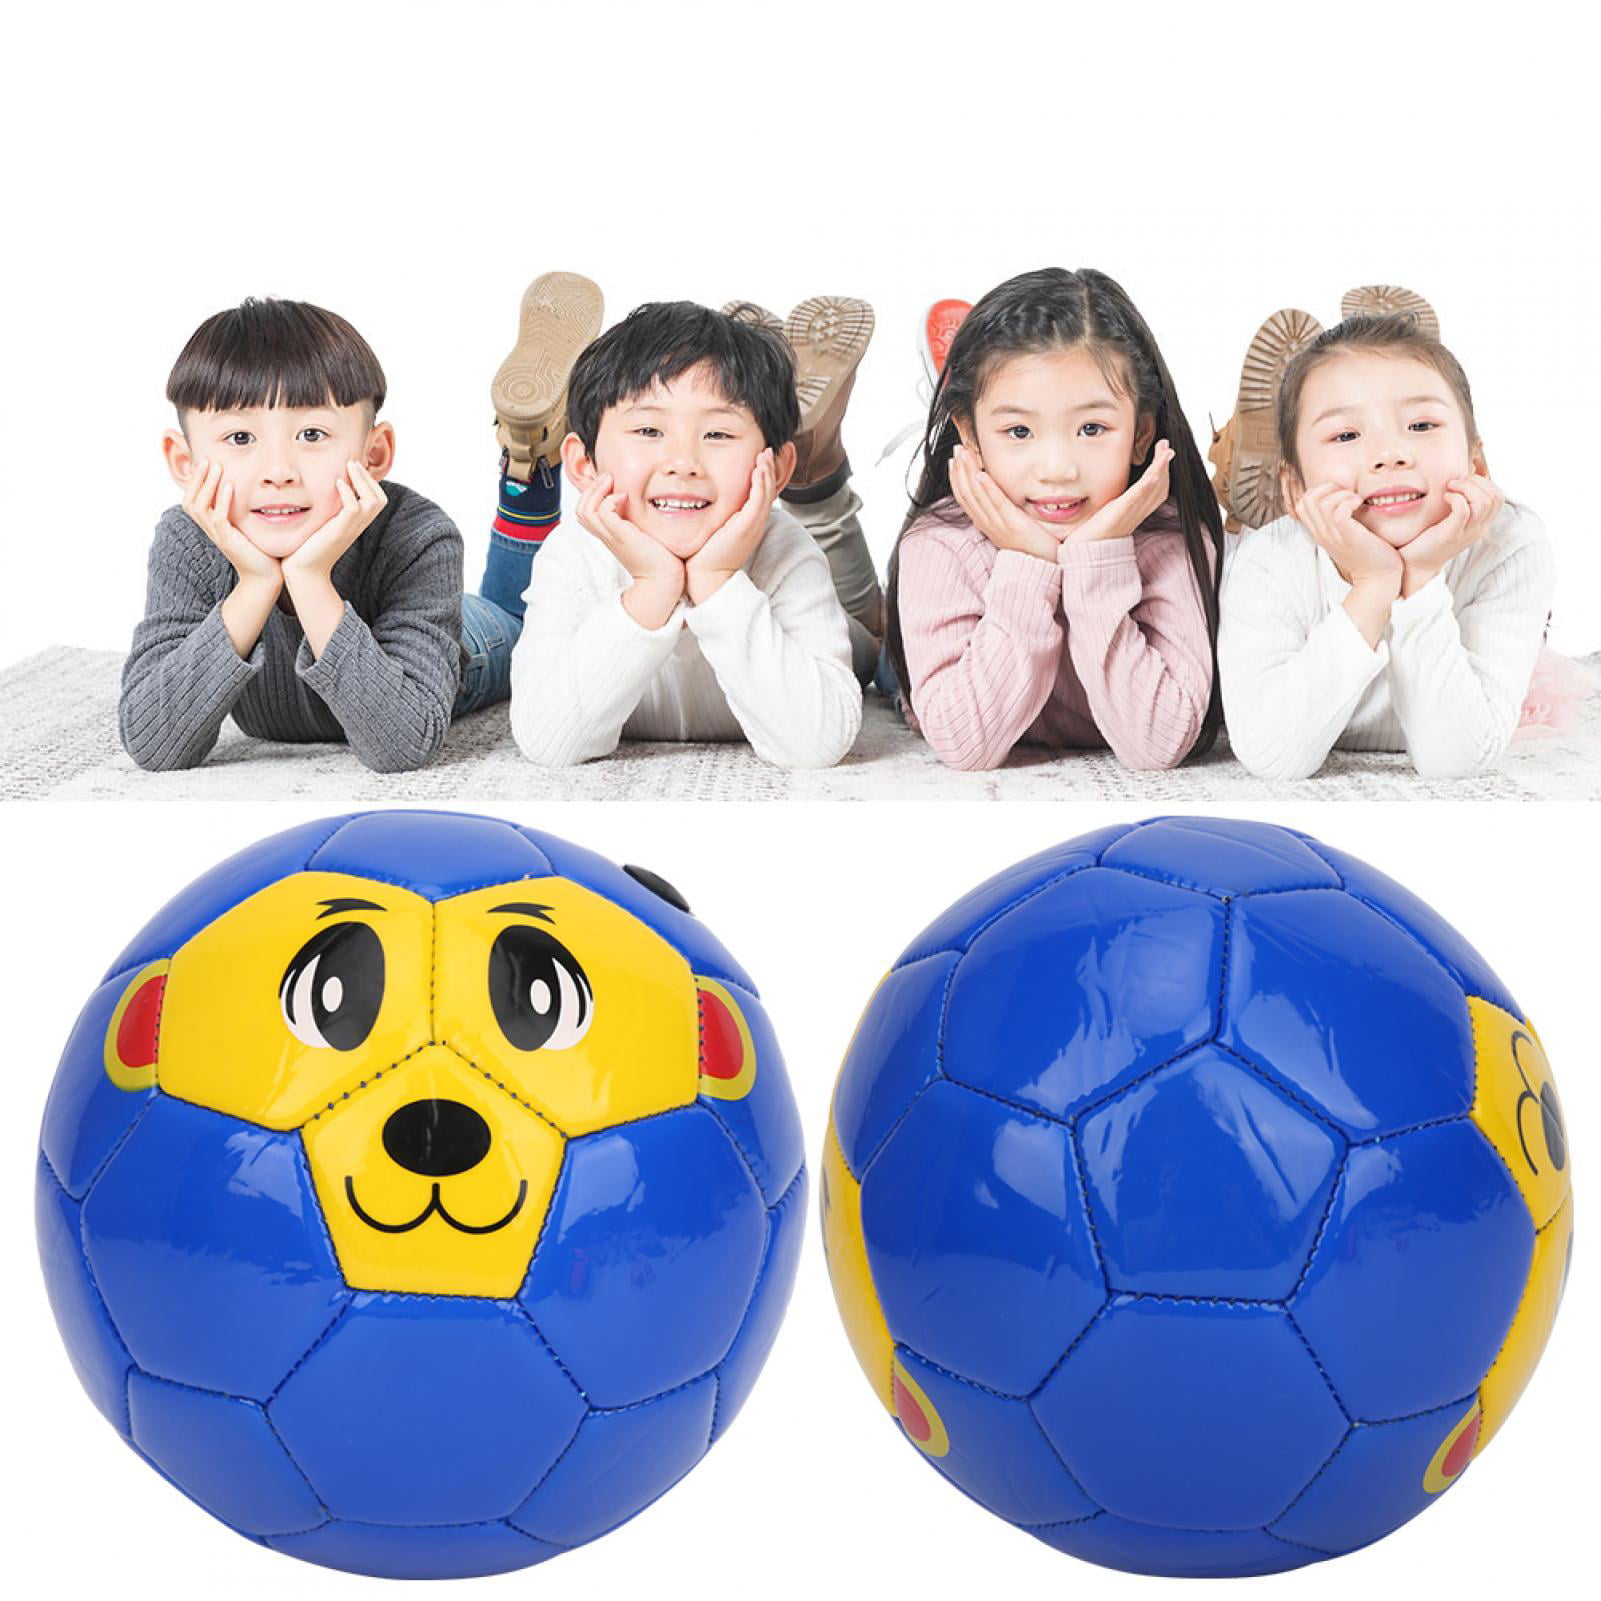 Tebru No 2 Pvc Solf Lightweight Mini Ball Children Soccer Monkey For Primary School Kindergarten Children Football Mini Soccer Ball Walmart Com Walmart Com